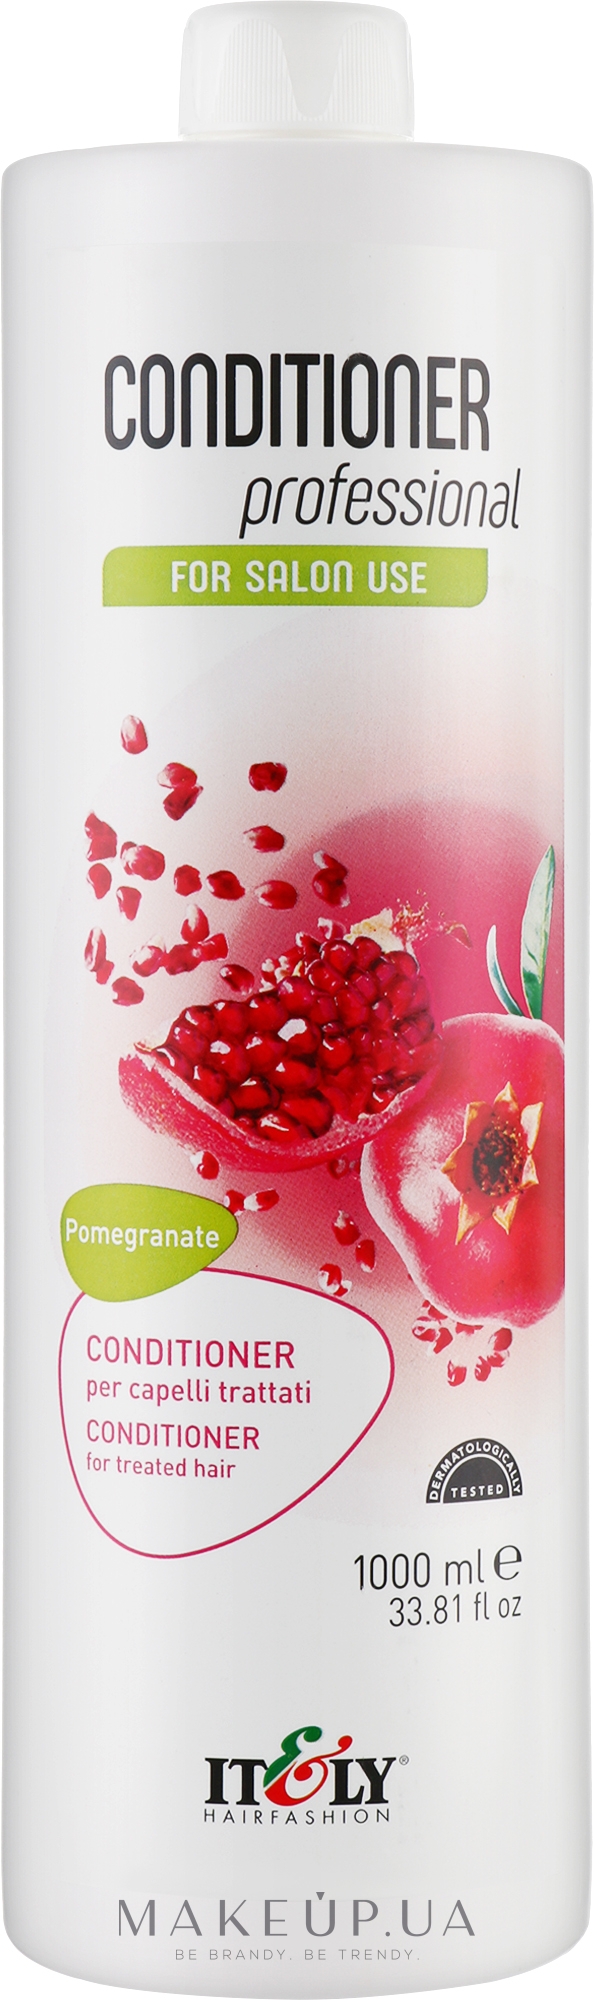 Гранатовый кондиционер для волос - Itely Hairfashion Conditioner Professional Pomegranate — фото 1000ml